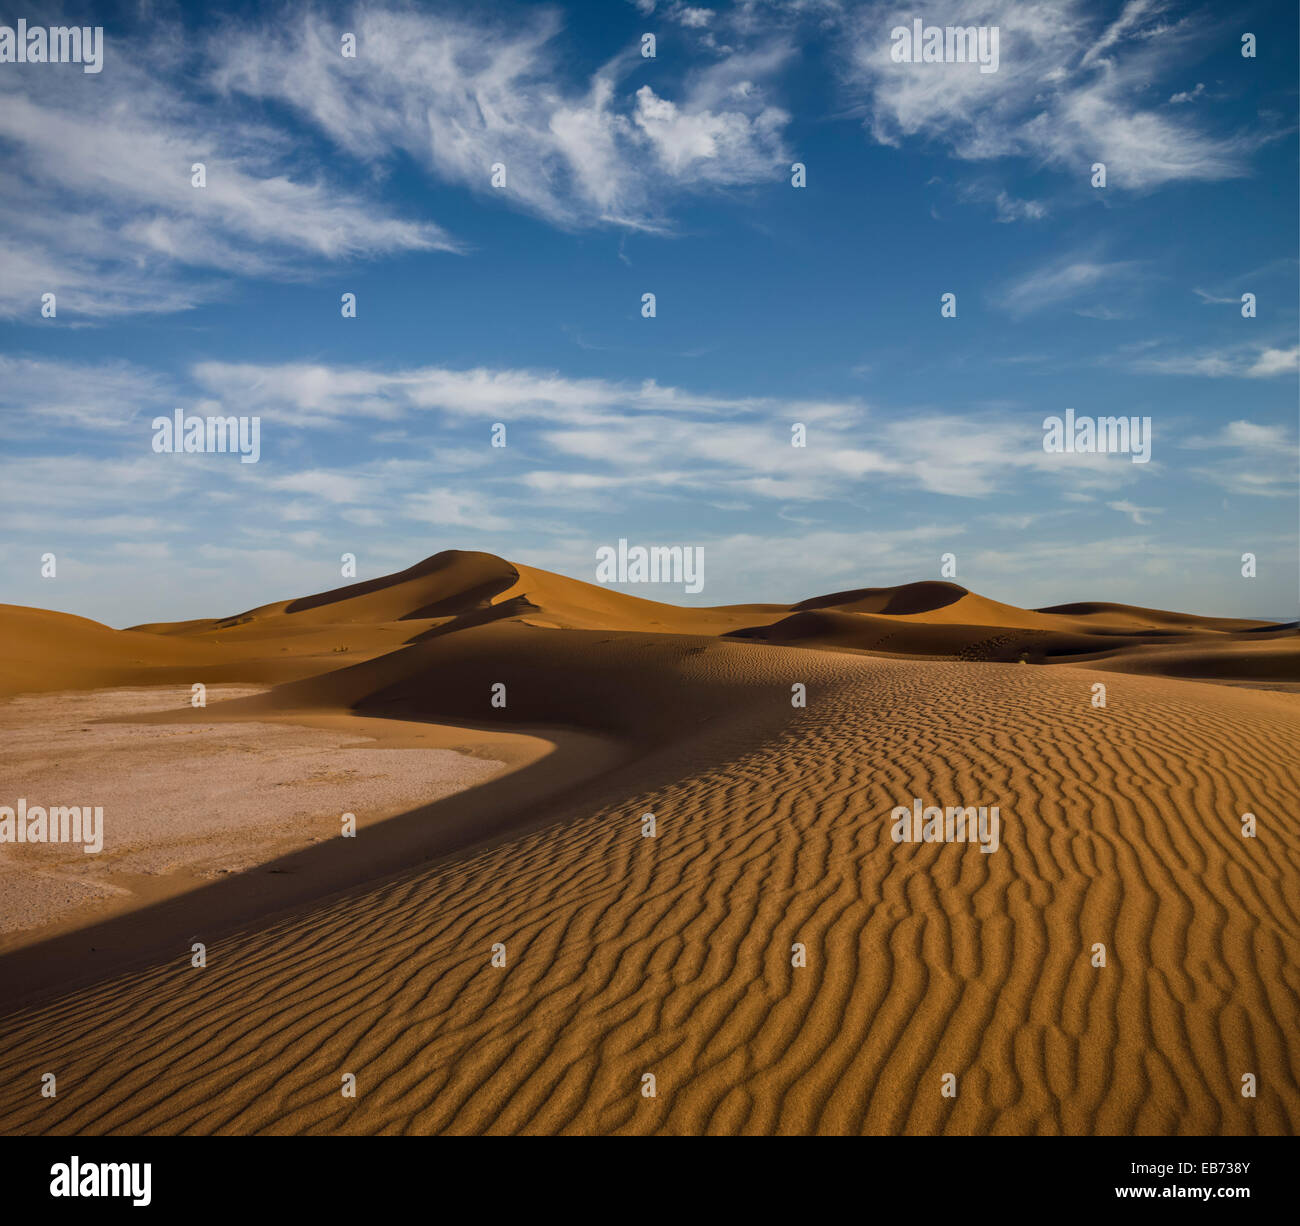 DUNES SAHARA DESERT ERG CHIGAGA MOROCCO Stock Photo